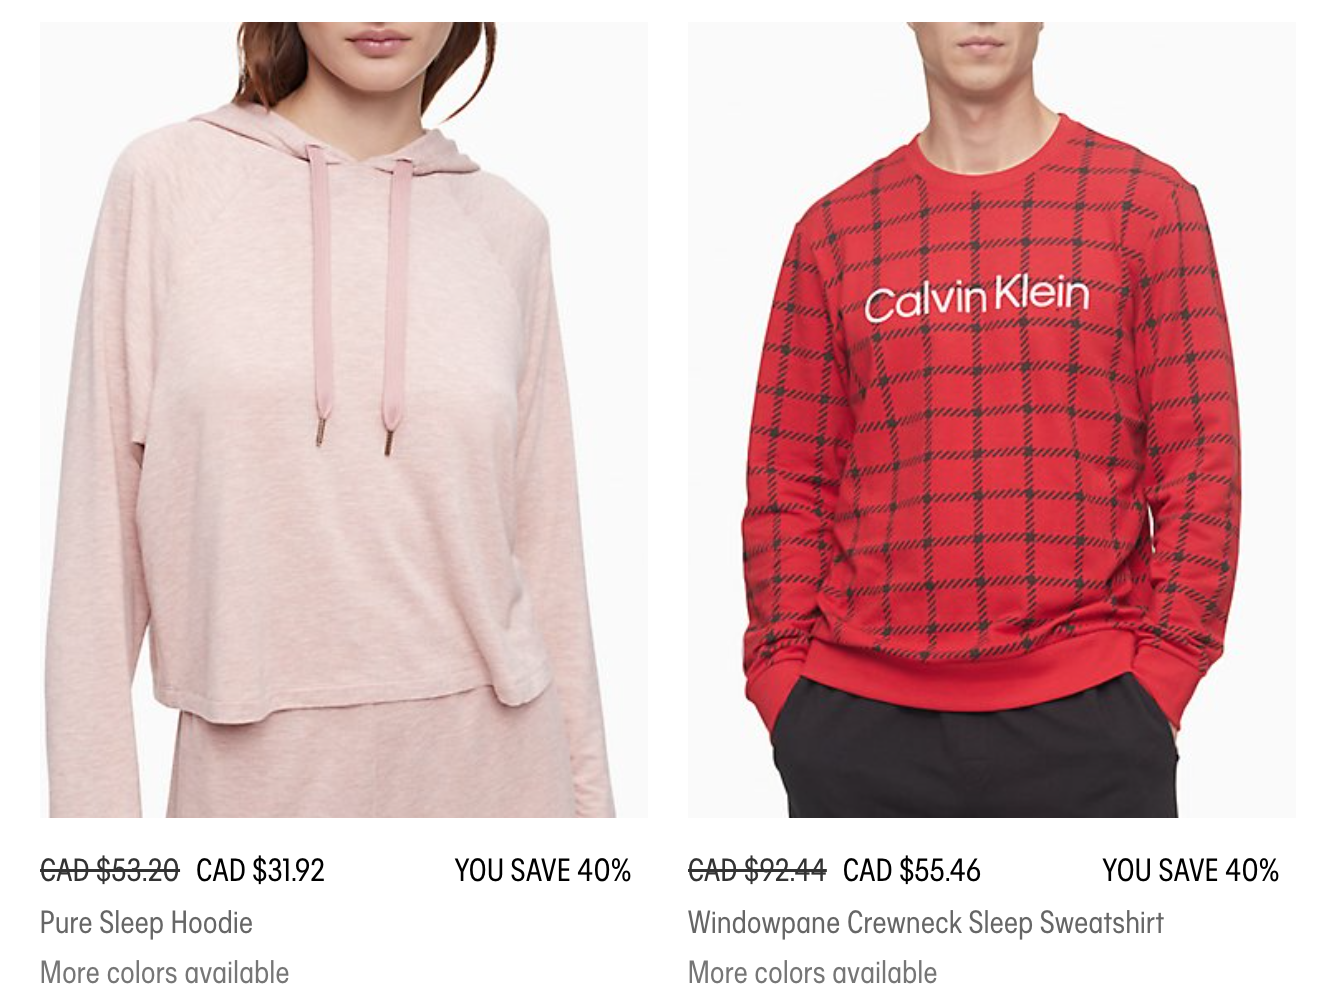 Calvin Klein Canada Sale: Save 40% off Sale Items - Hot Canada Deals ...